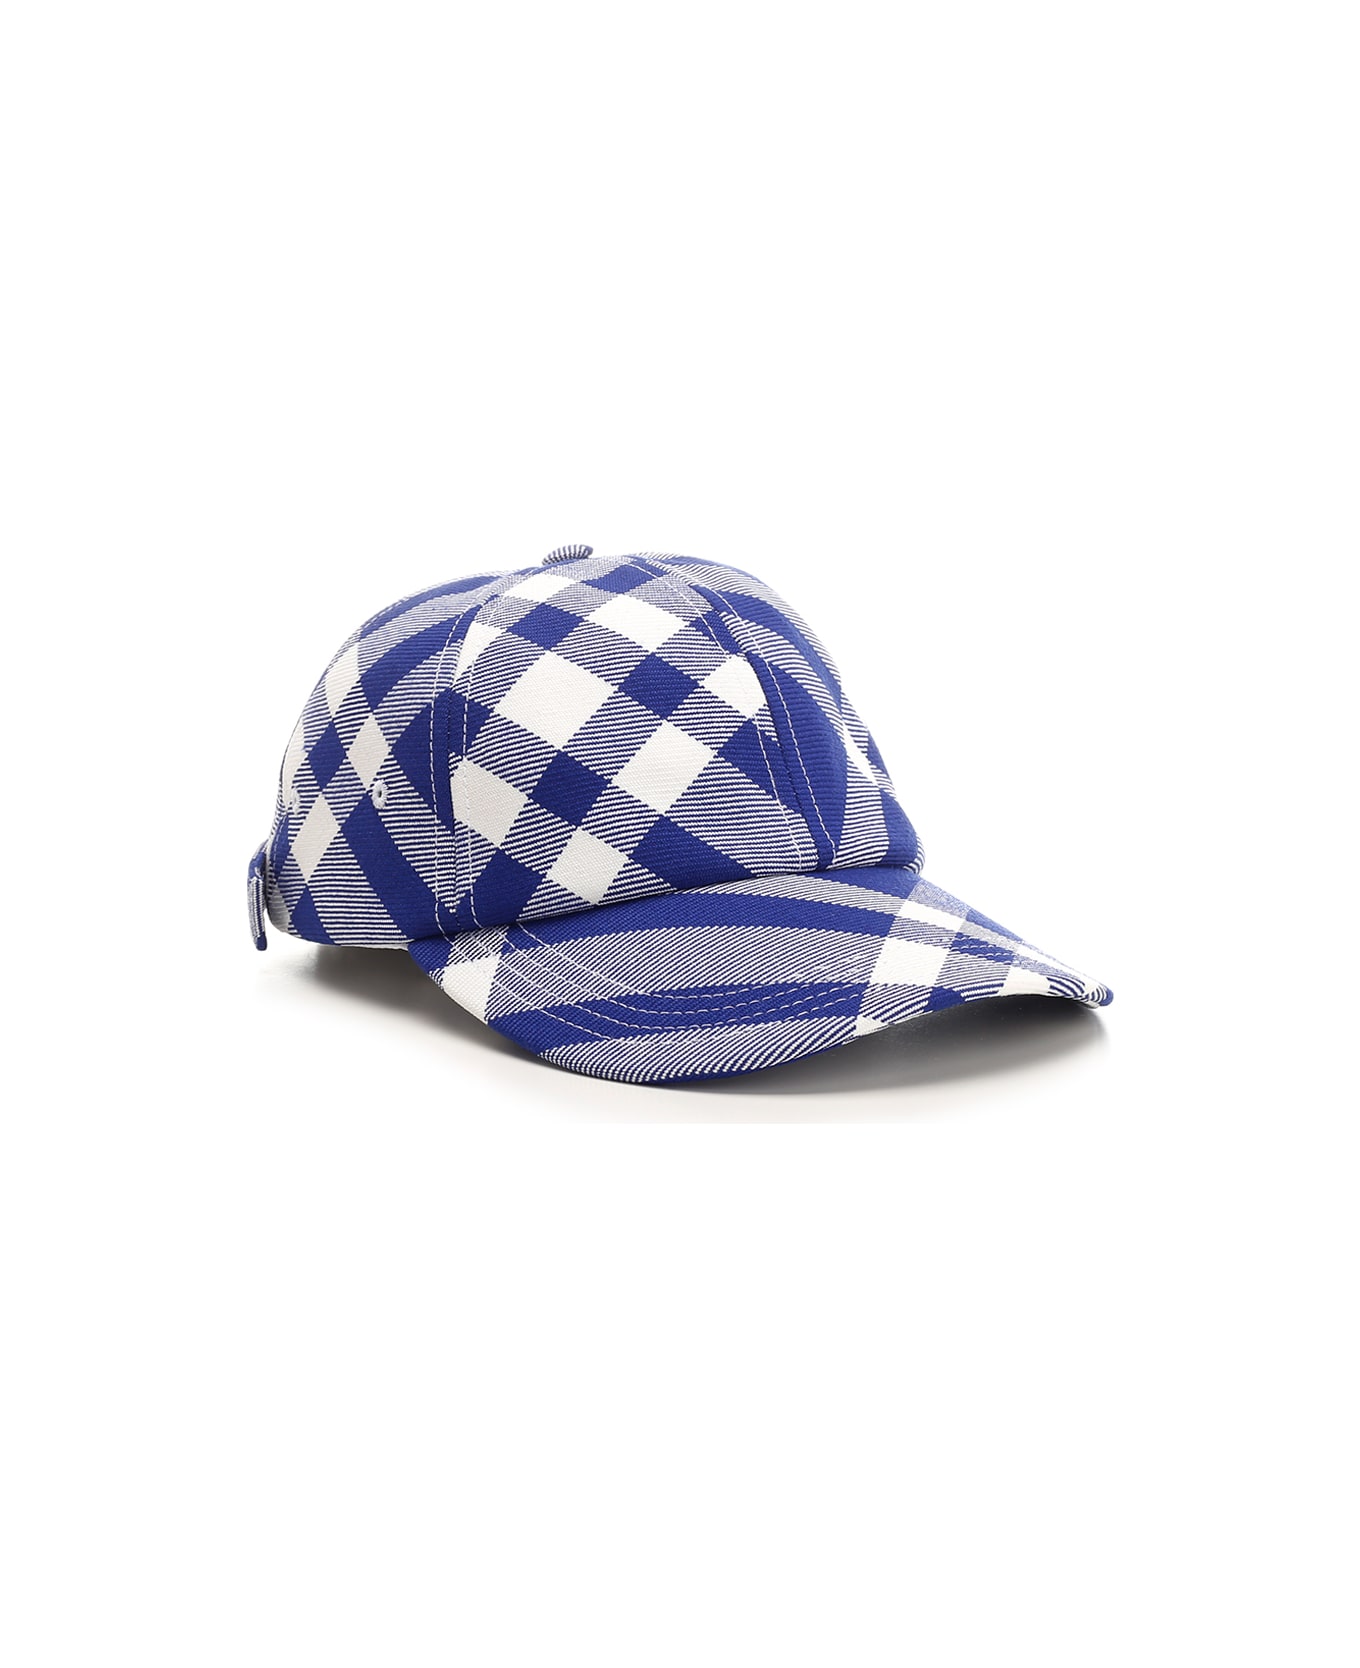 Burberry Baseball Hat - Multicolor 帽子